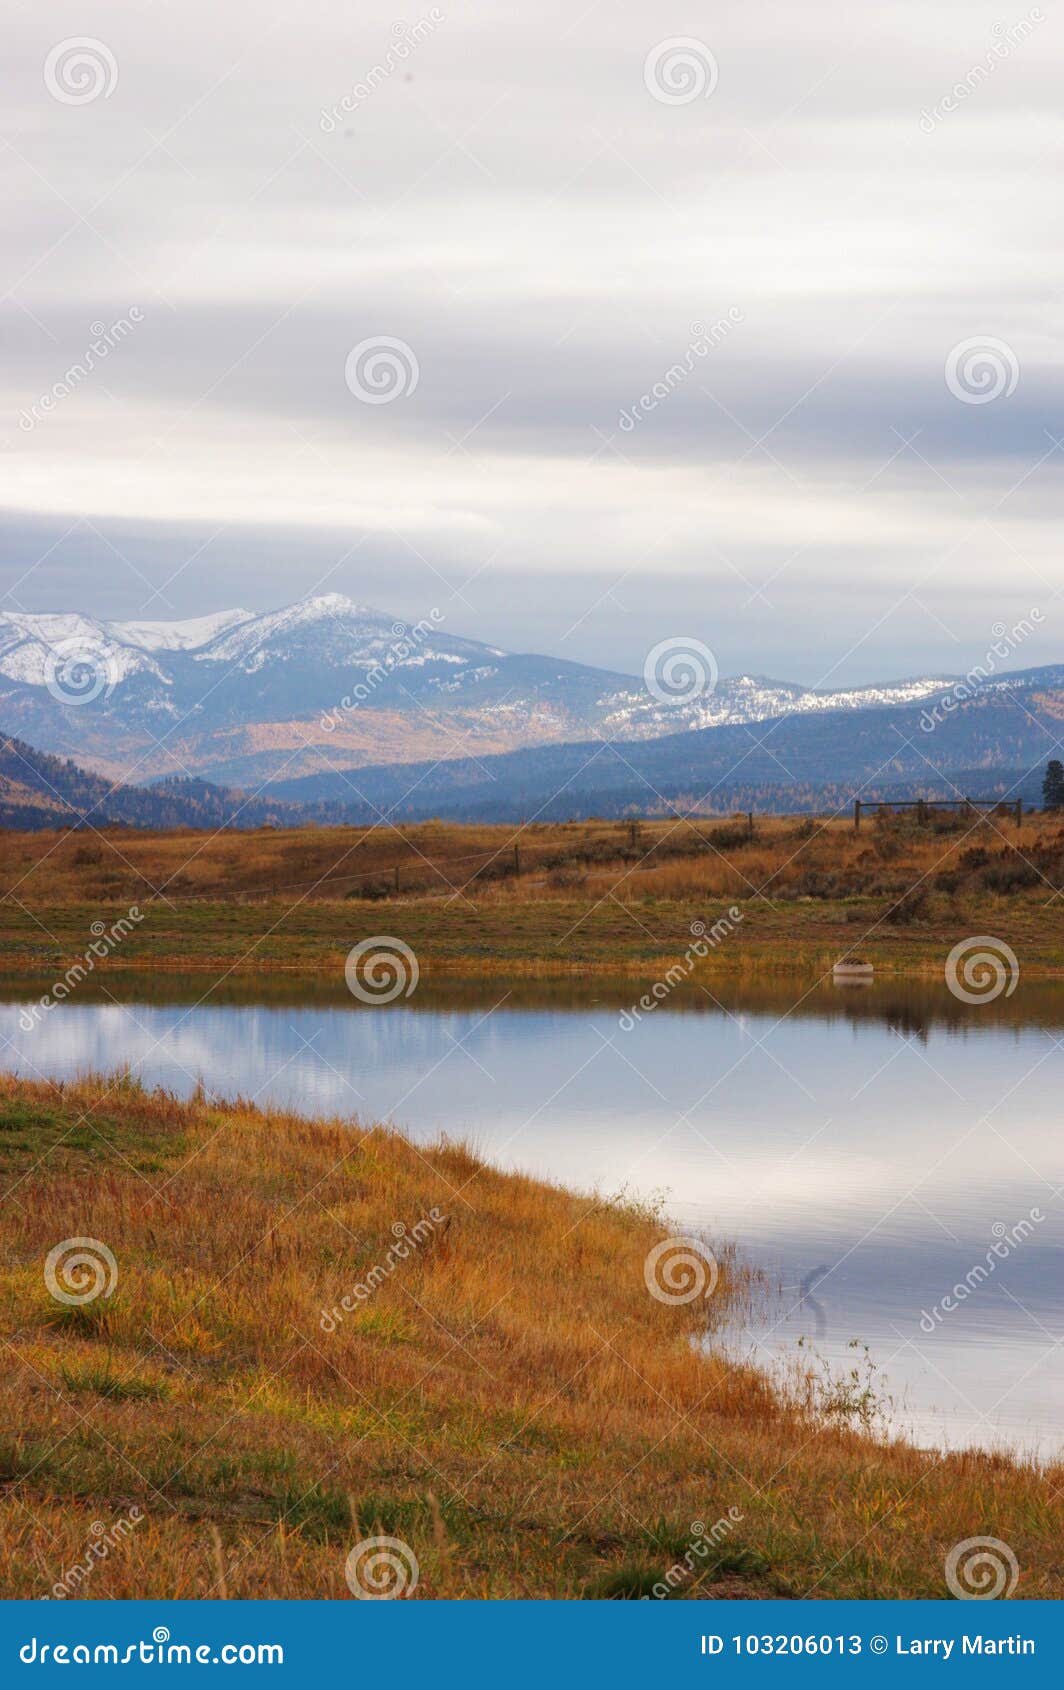 blackfoot river valley, montana